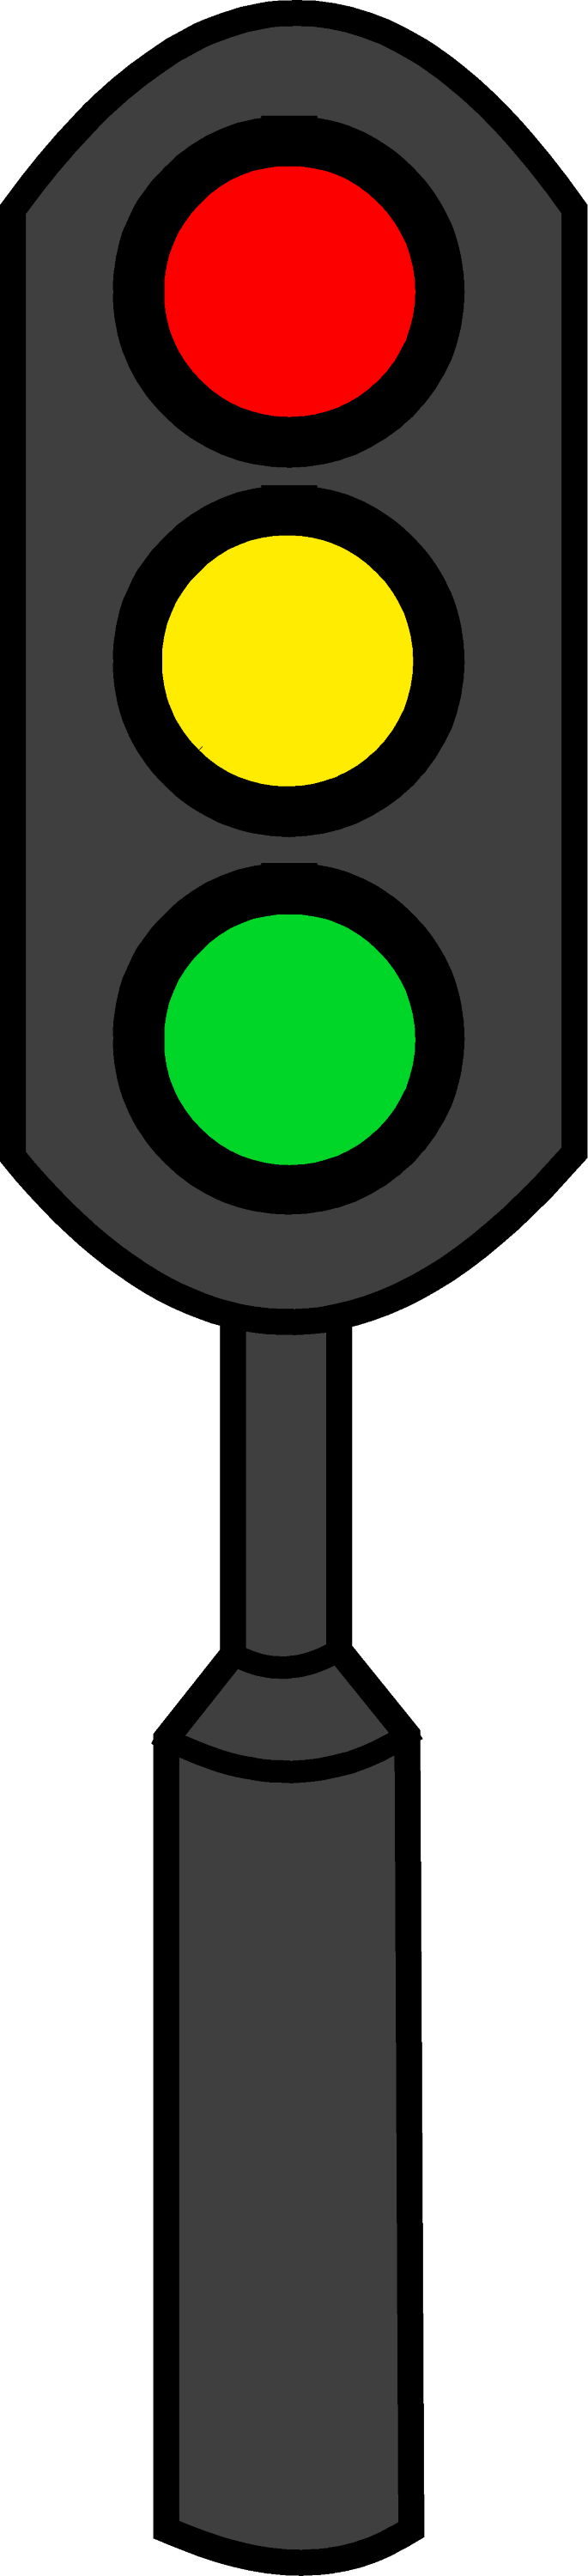 clipart green stop light - photo #40